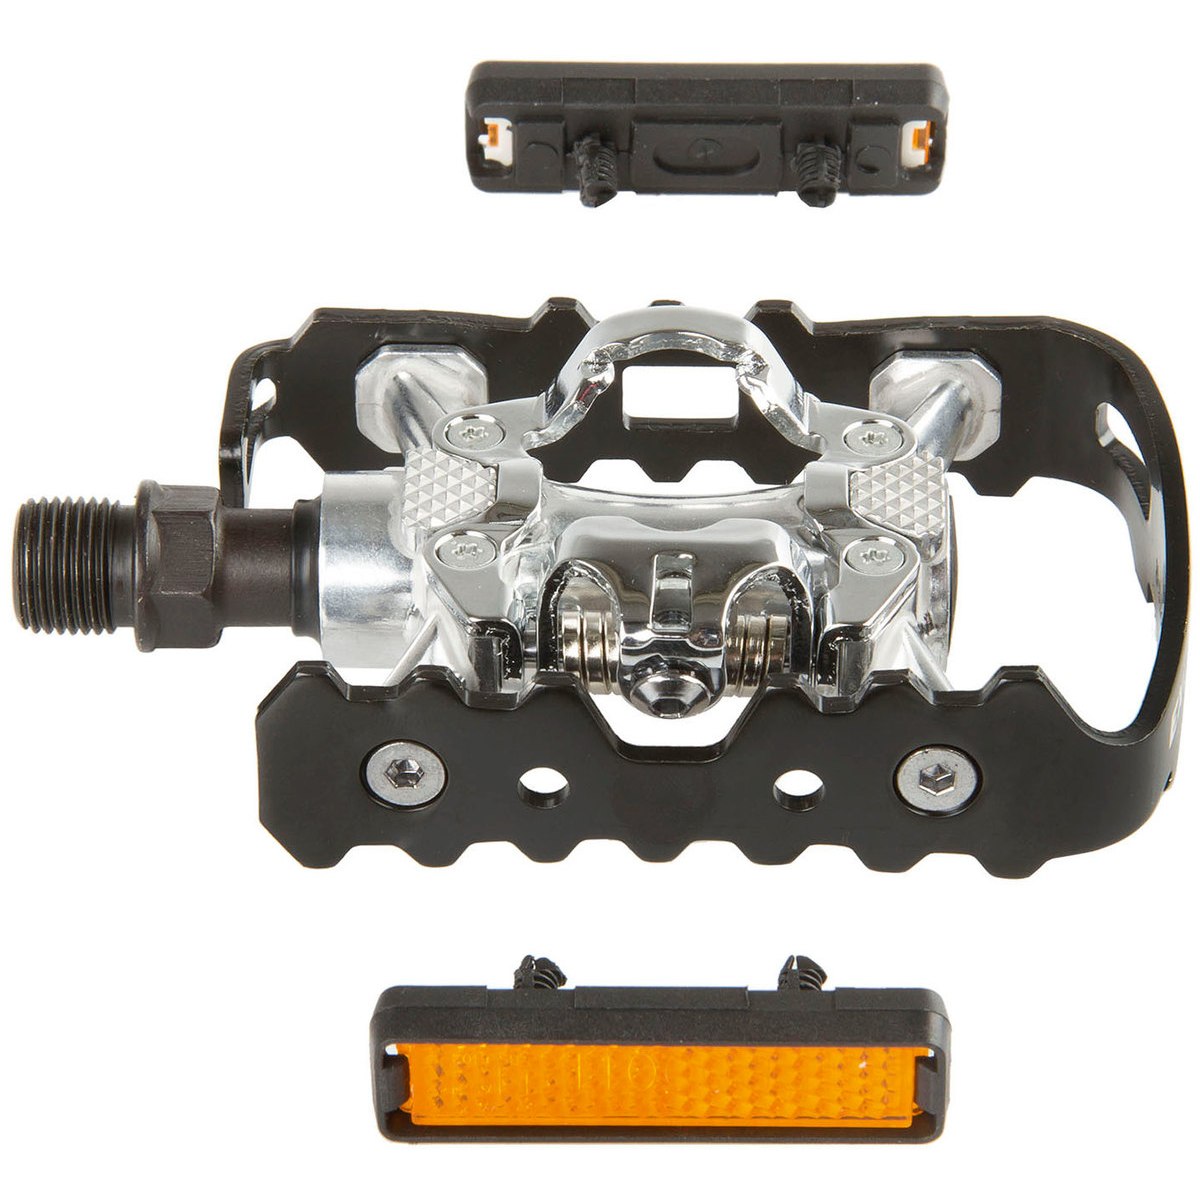 Picture of Exustar E-PM818 Triple Interface Pedal - black